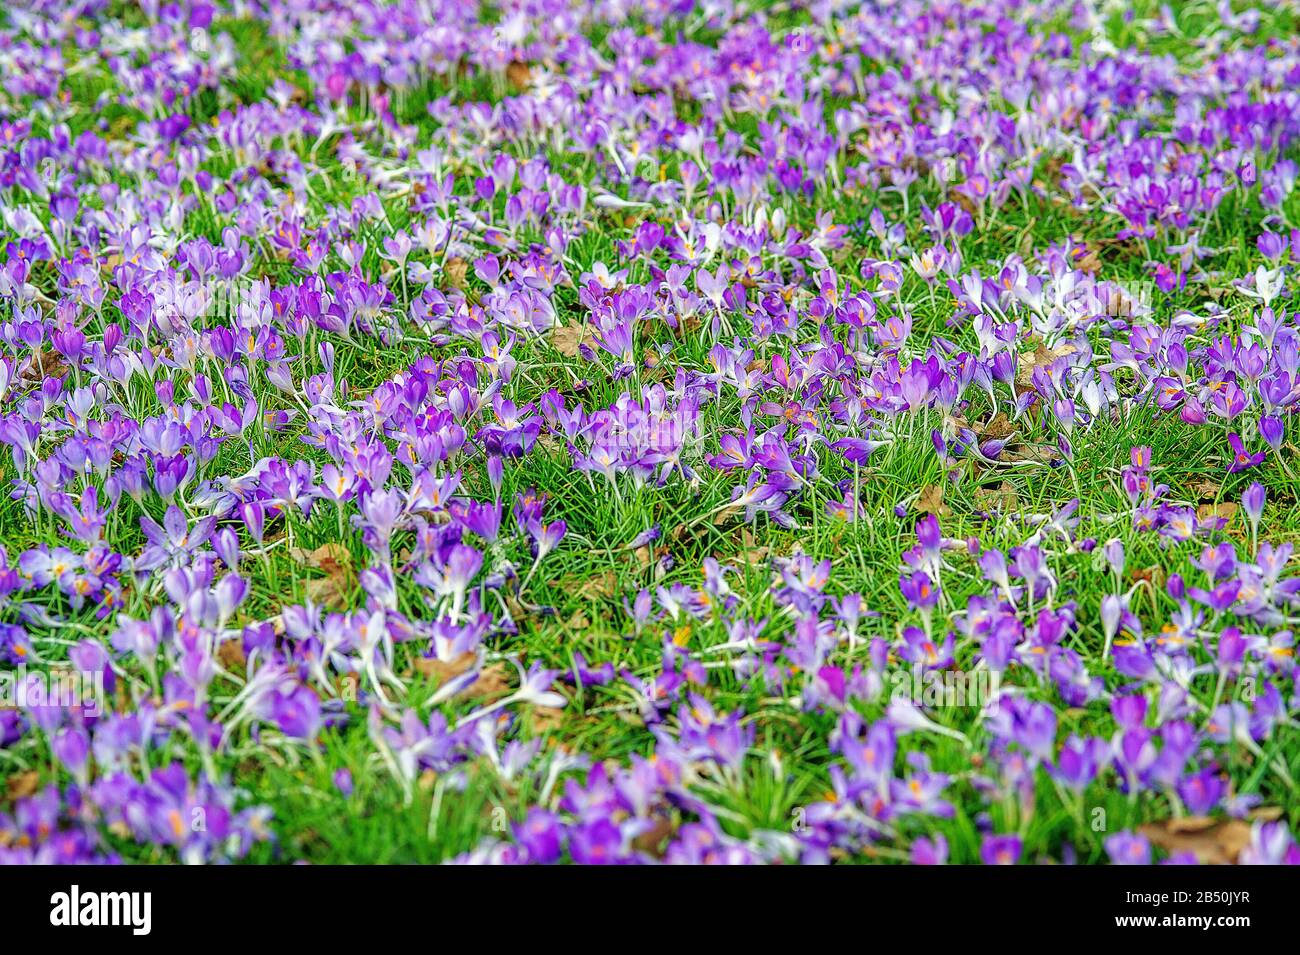 Frühlings-Krokus, Frühlings-Safran (Crocus Vernus Subsp. Albiflorus) Crocus • Bade-Wurtemberg, Allemagne Banque D'Images